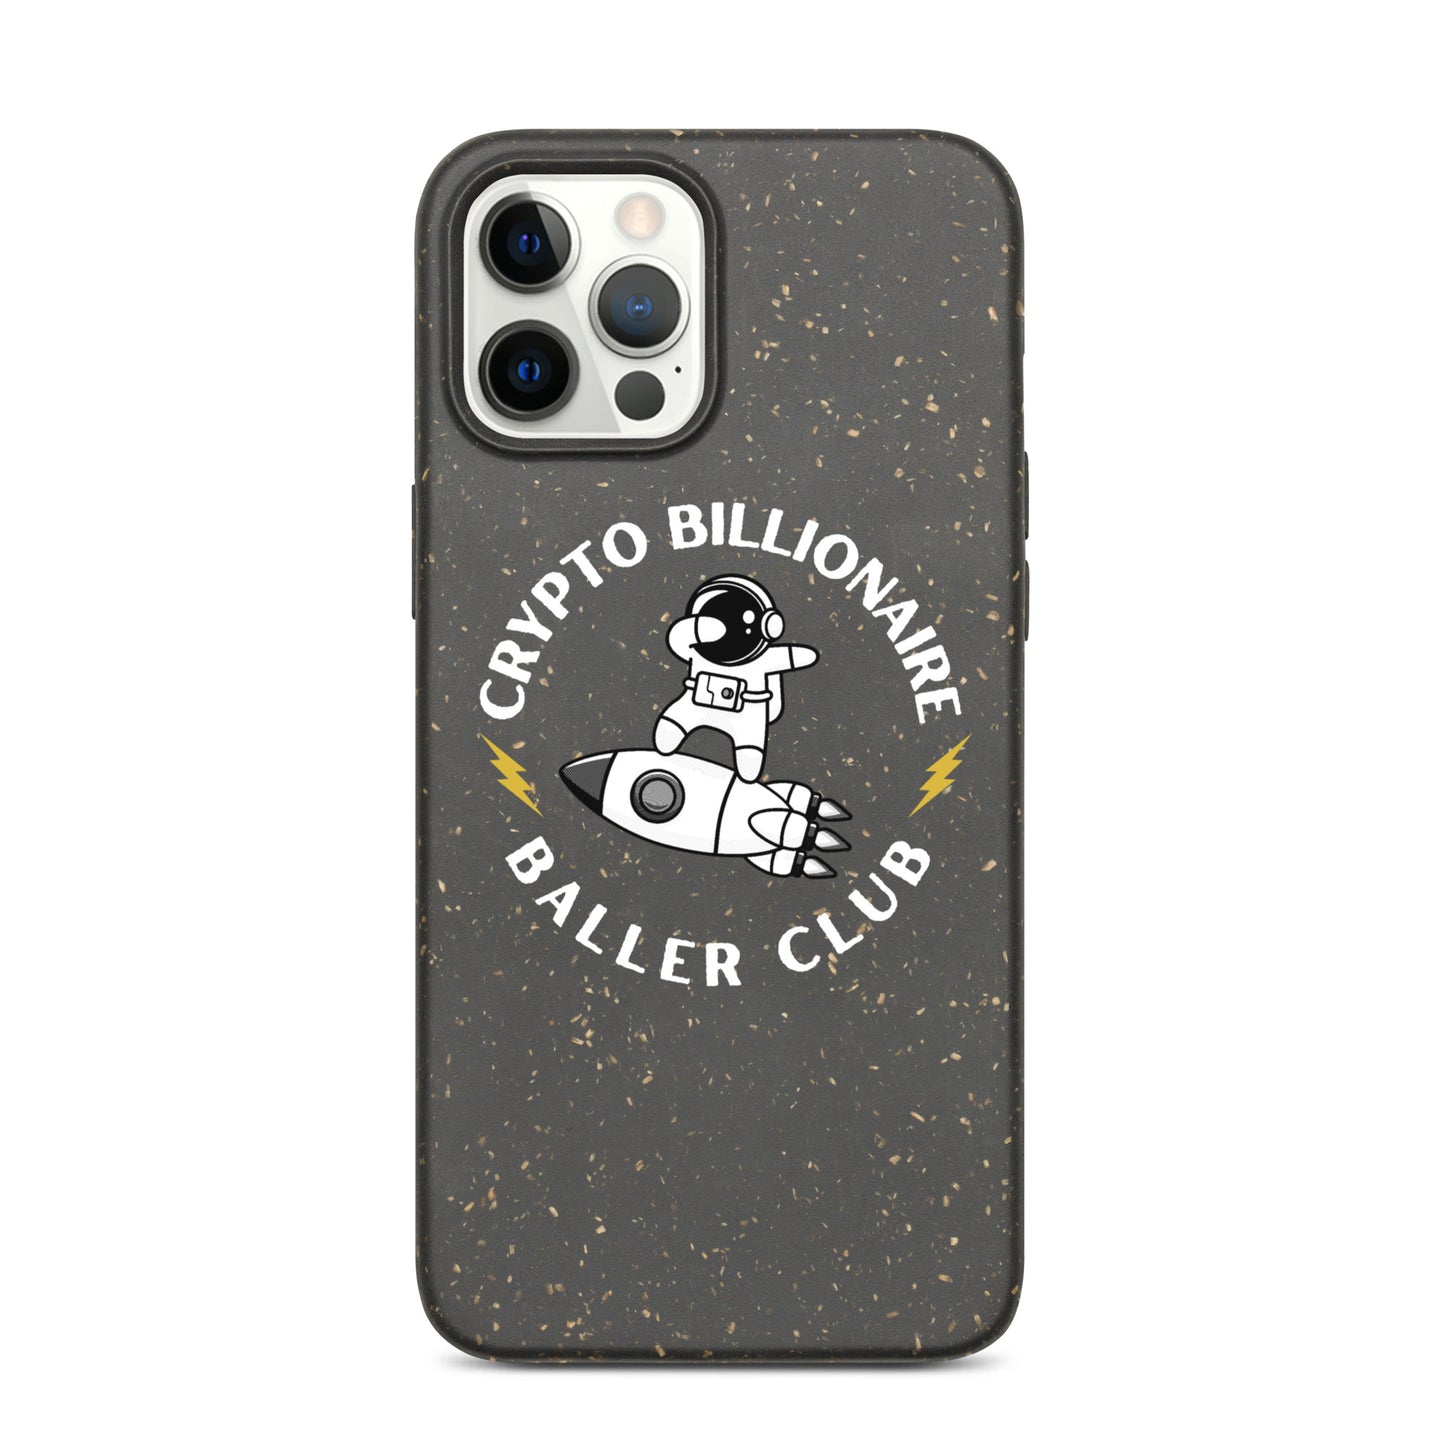 Crypto Billioinaire Baller Club - iPhone case